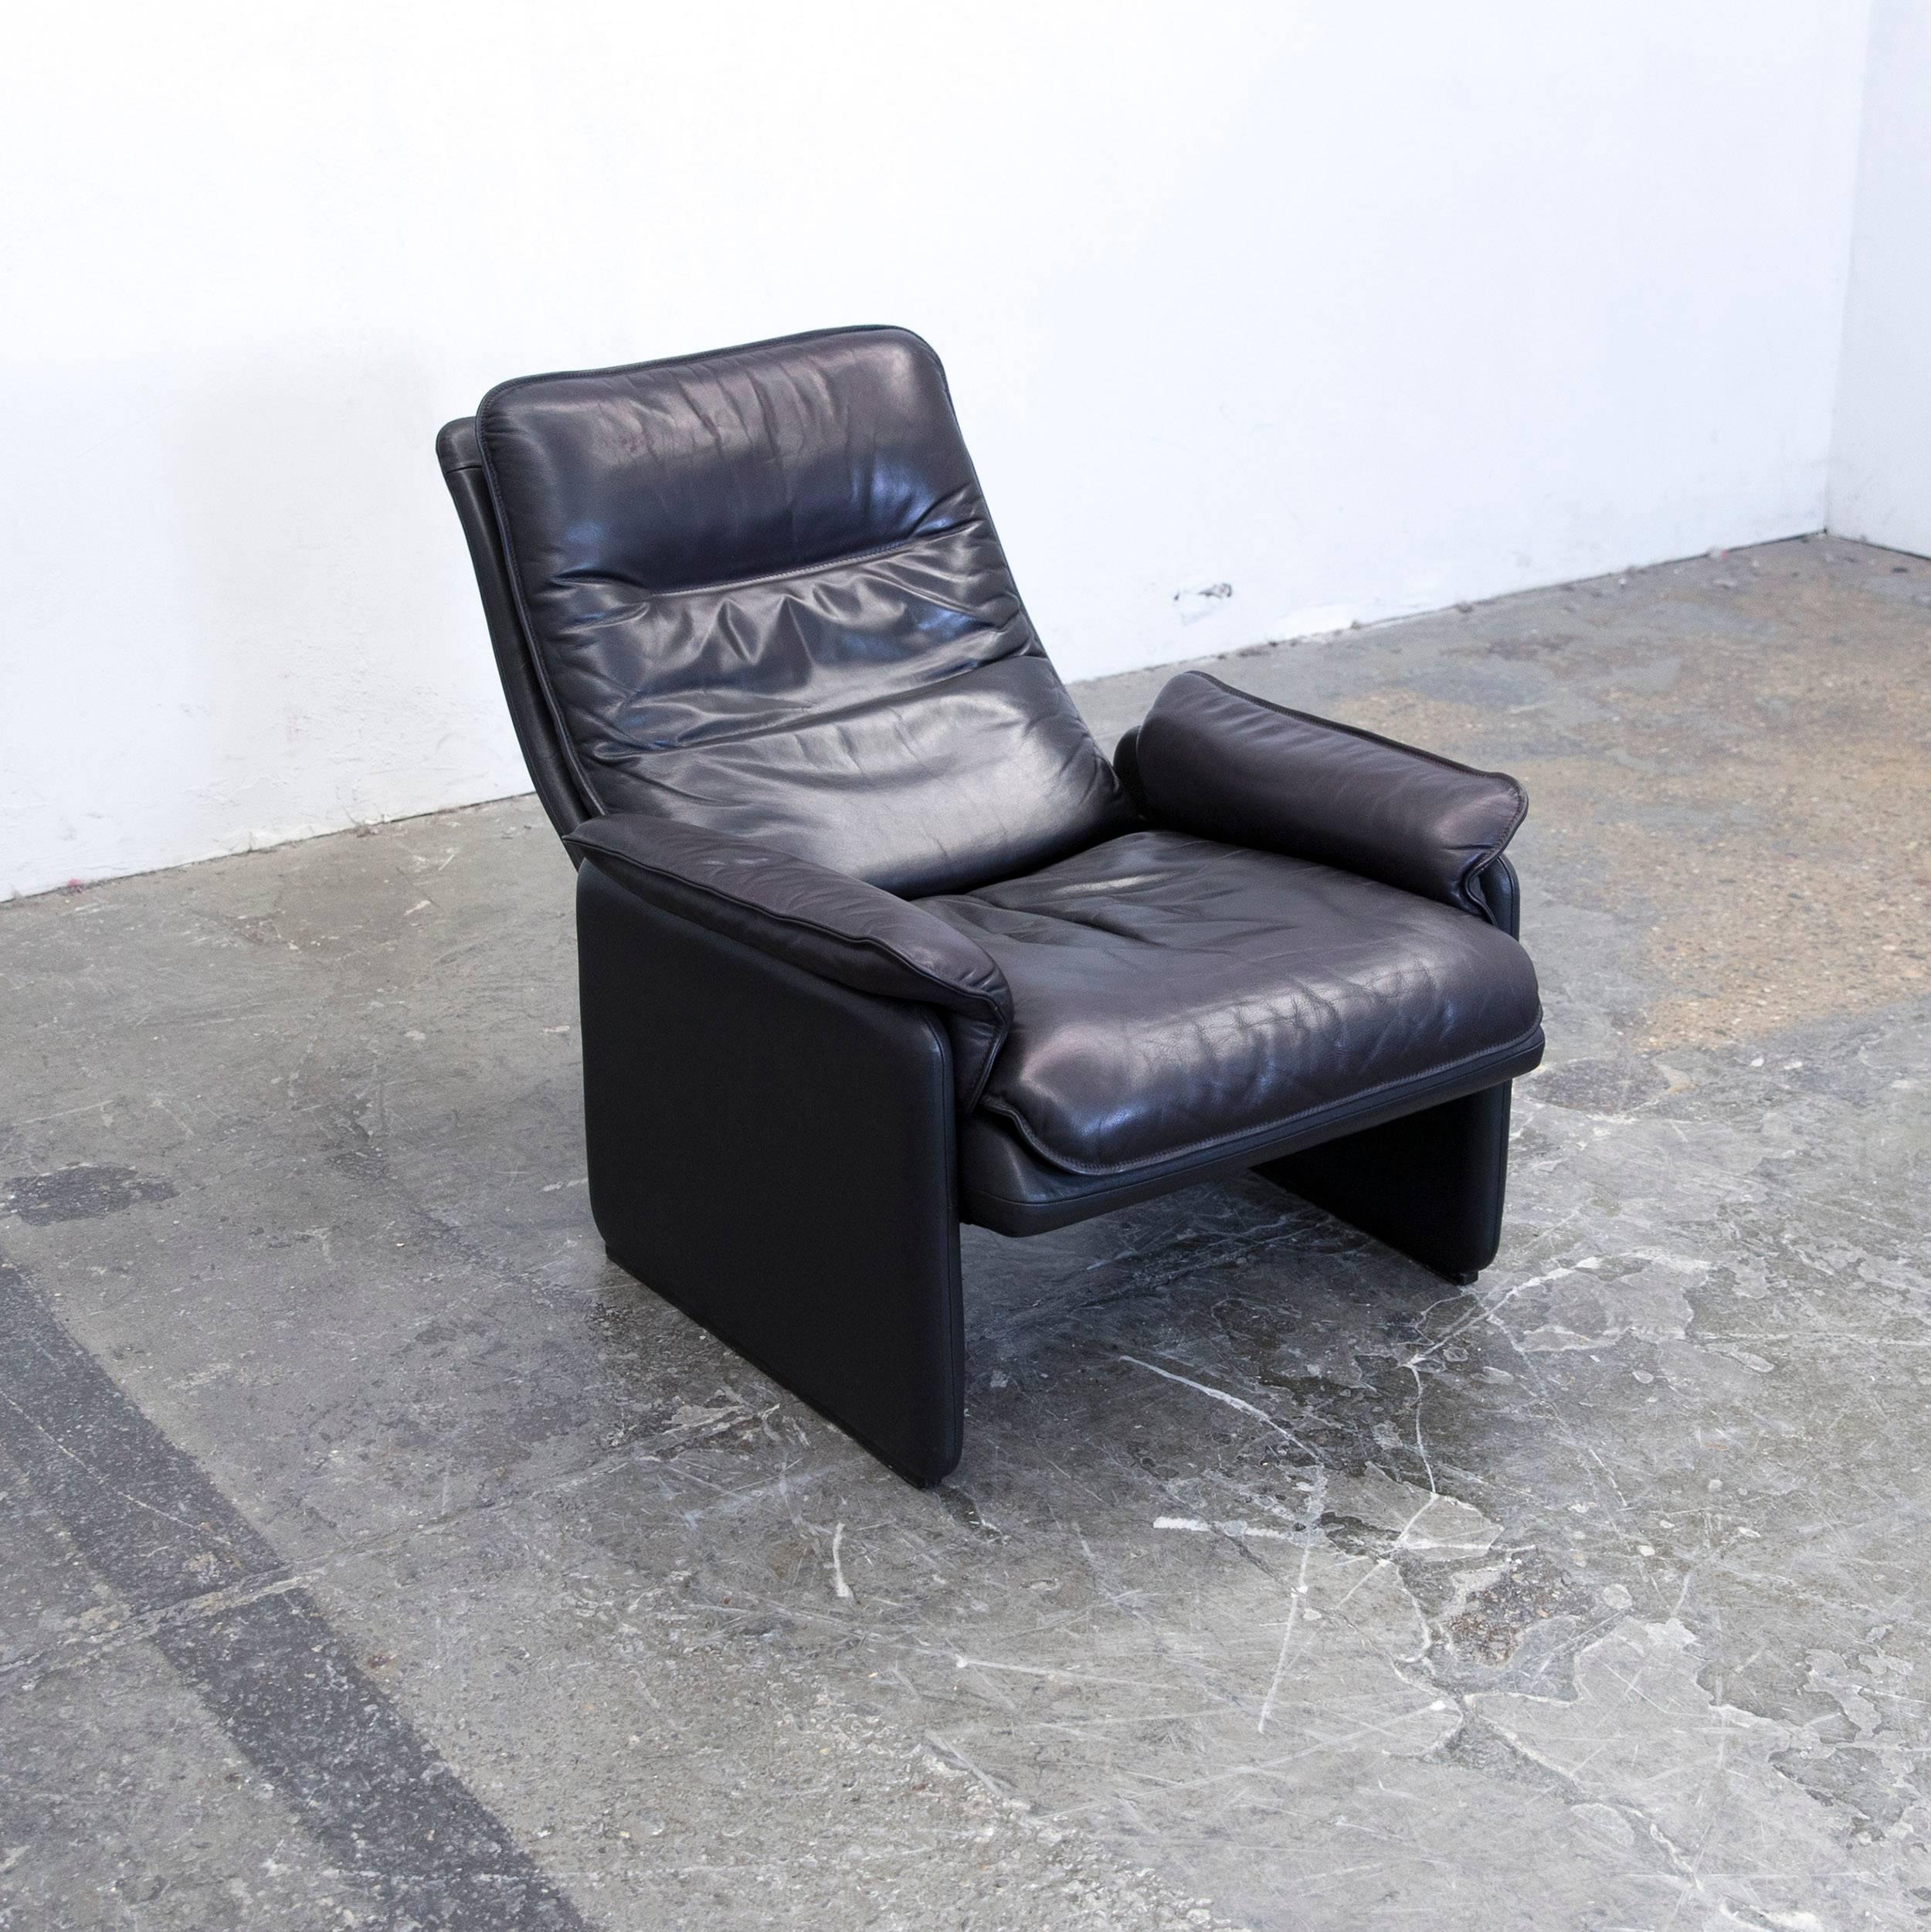 German de Sede Designer Armchair Leather Aubergine Black One-Seat Couch Modern